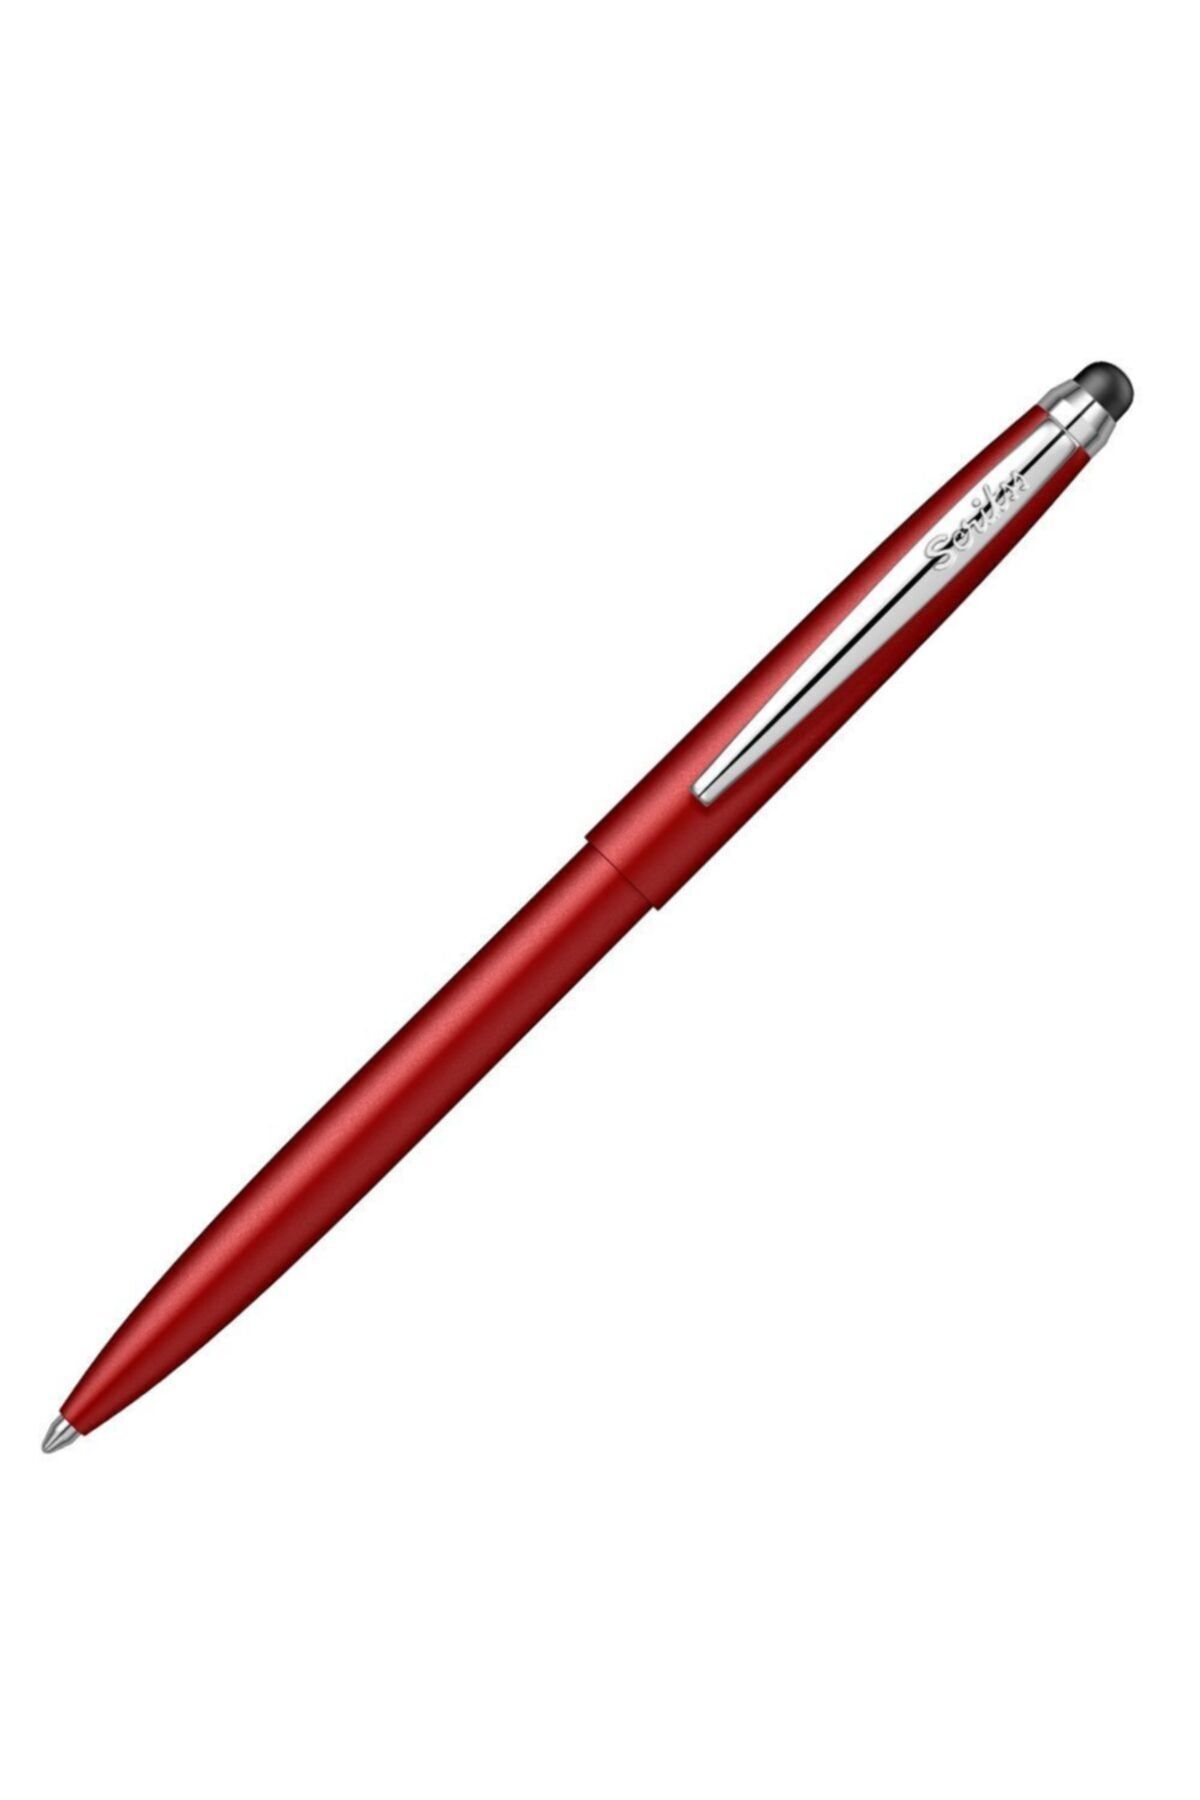 Scrikss T108 Stylus Tükenmez Dokunmatik Kalem Kırmızı